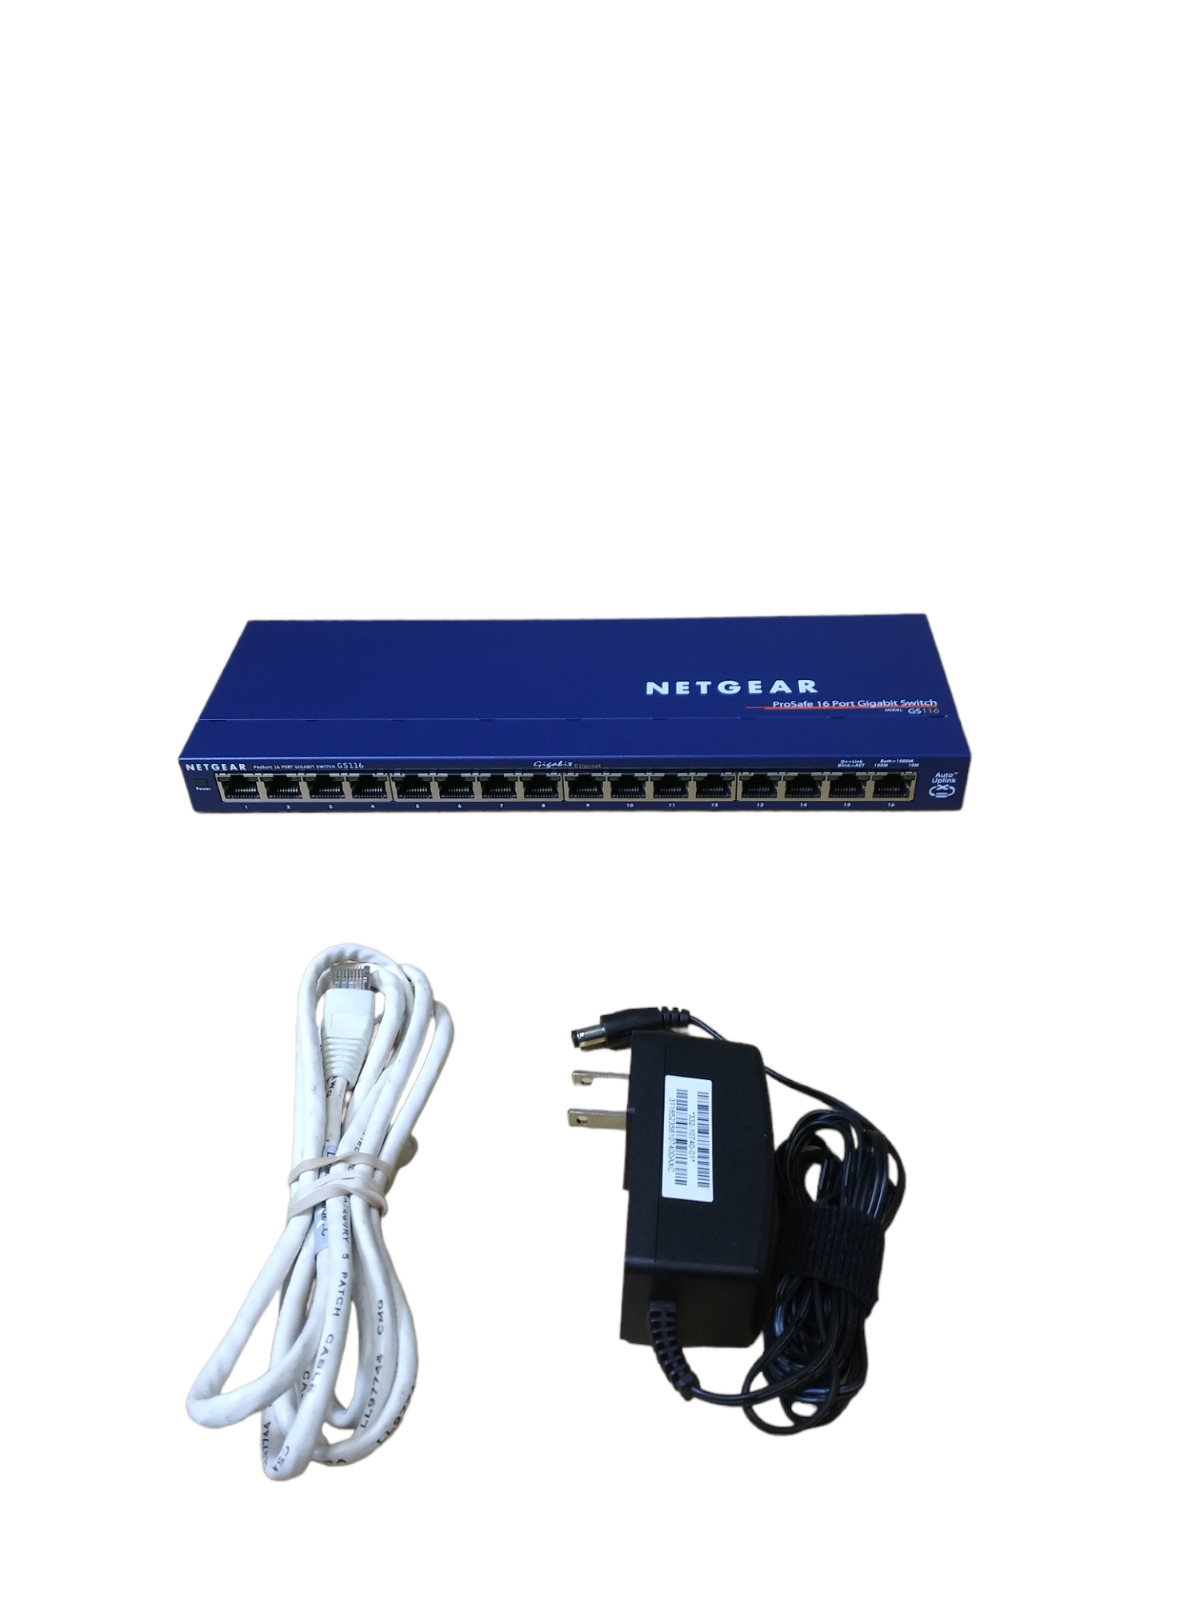 Netgear ProSafe GS116v2 16-Port Gigabit Switch